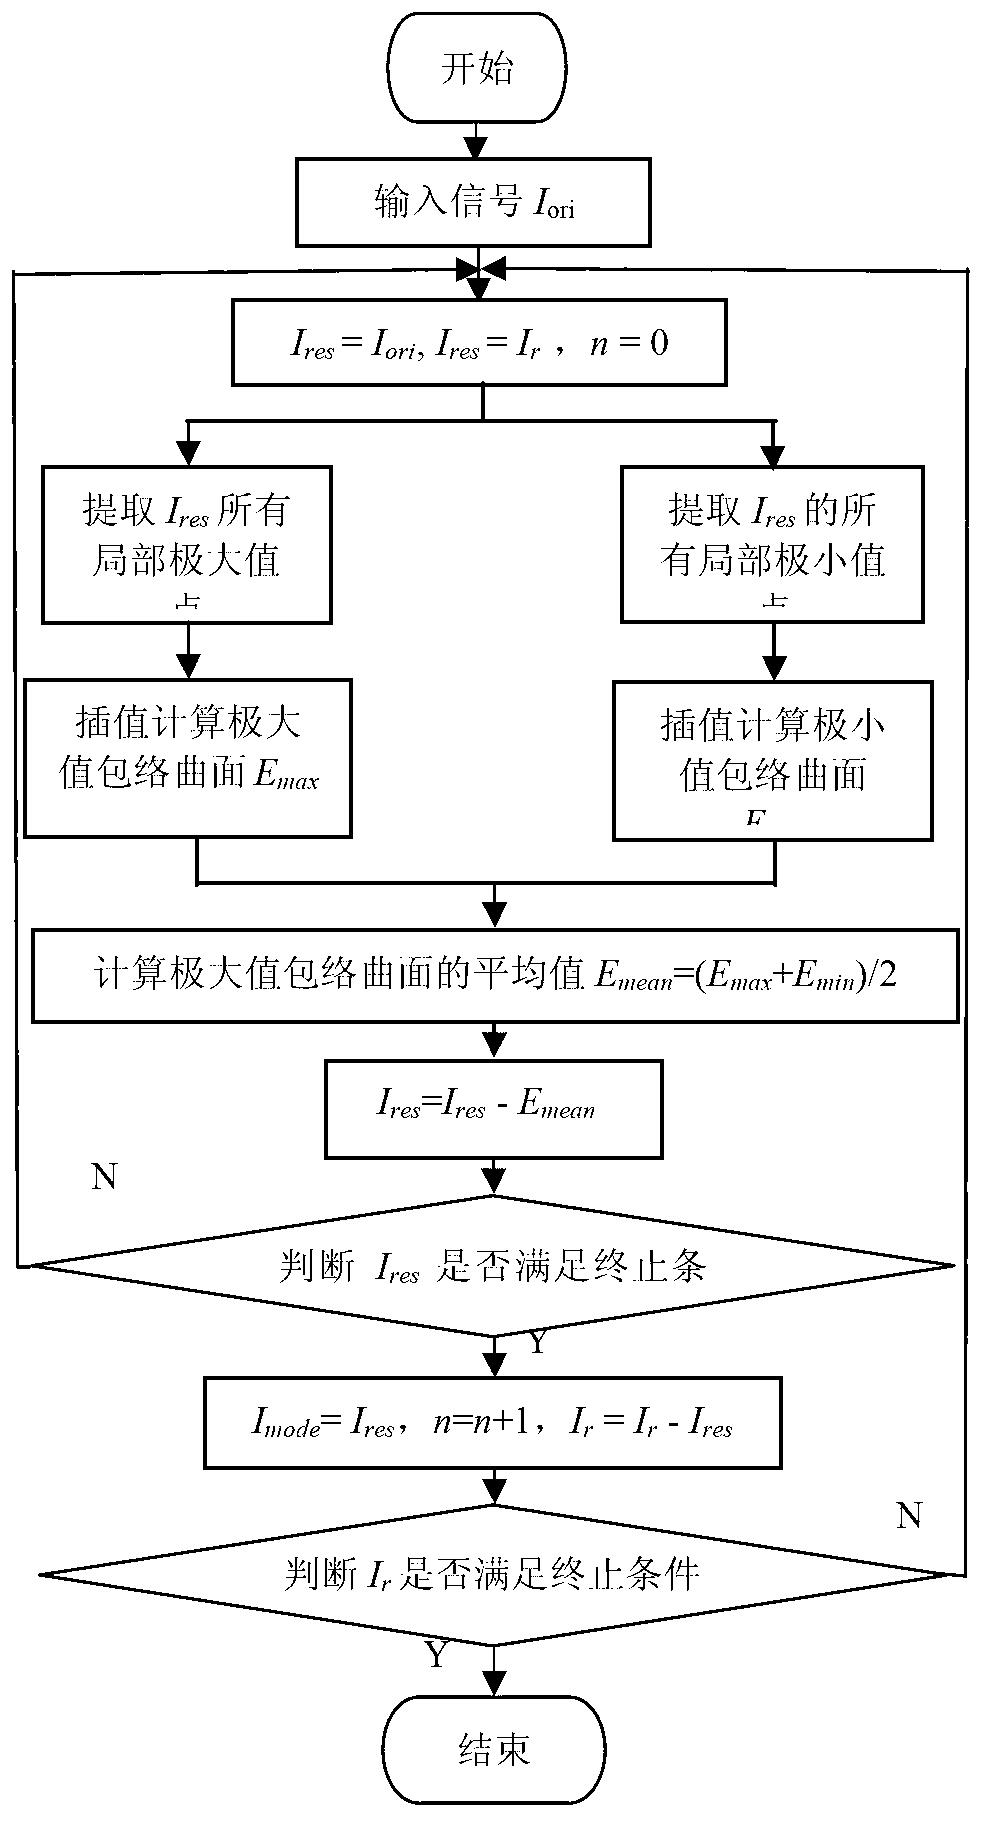 Image de-noising method by combining bidimensional Hilbert transformation with BEMD (bidimensional empirical mode decomposition)